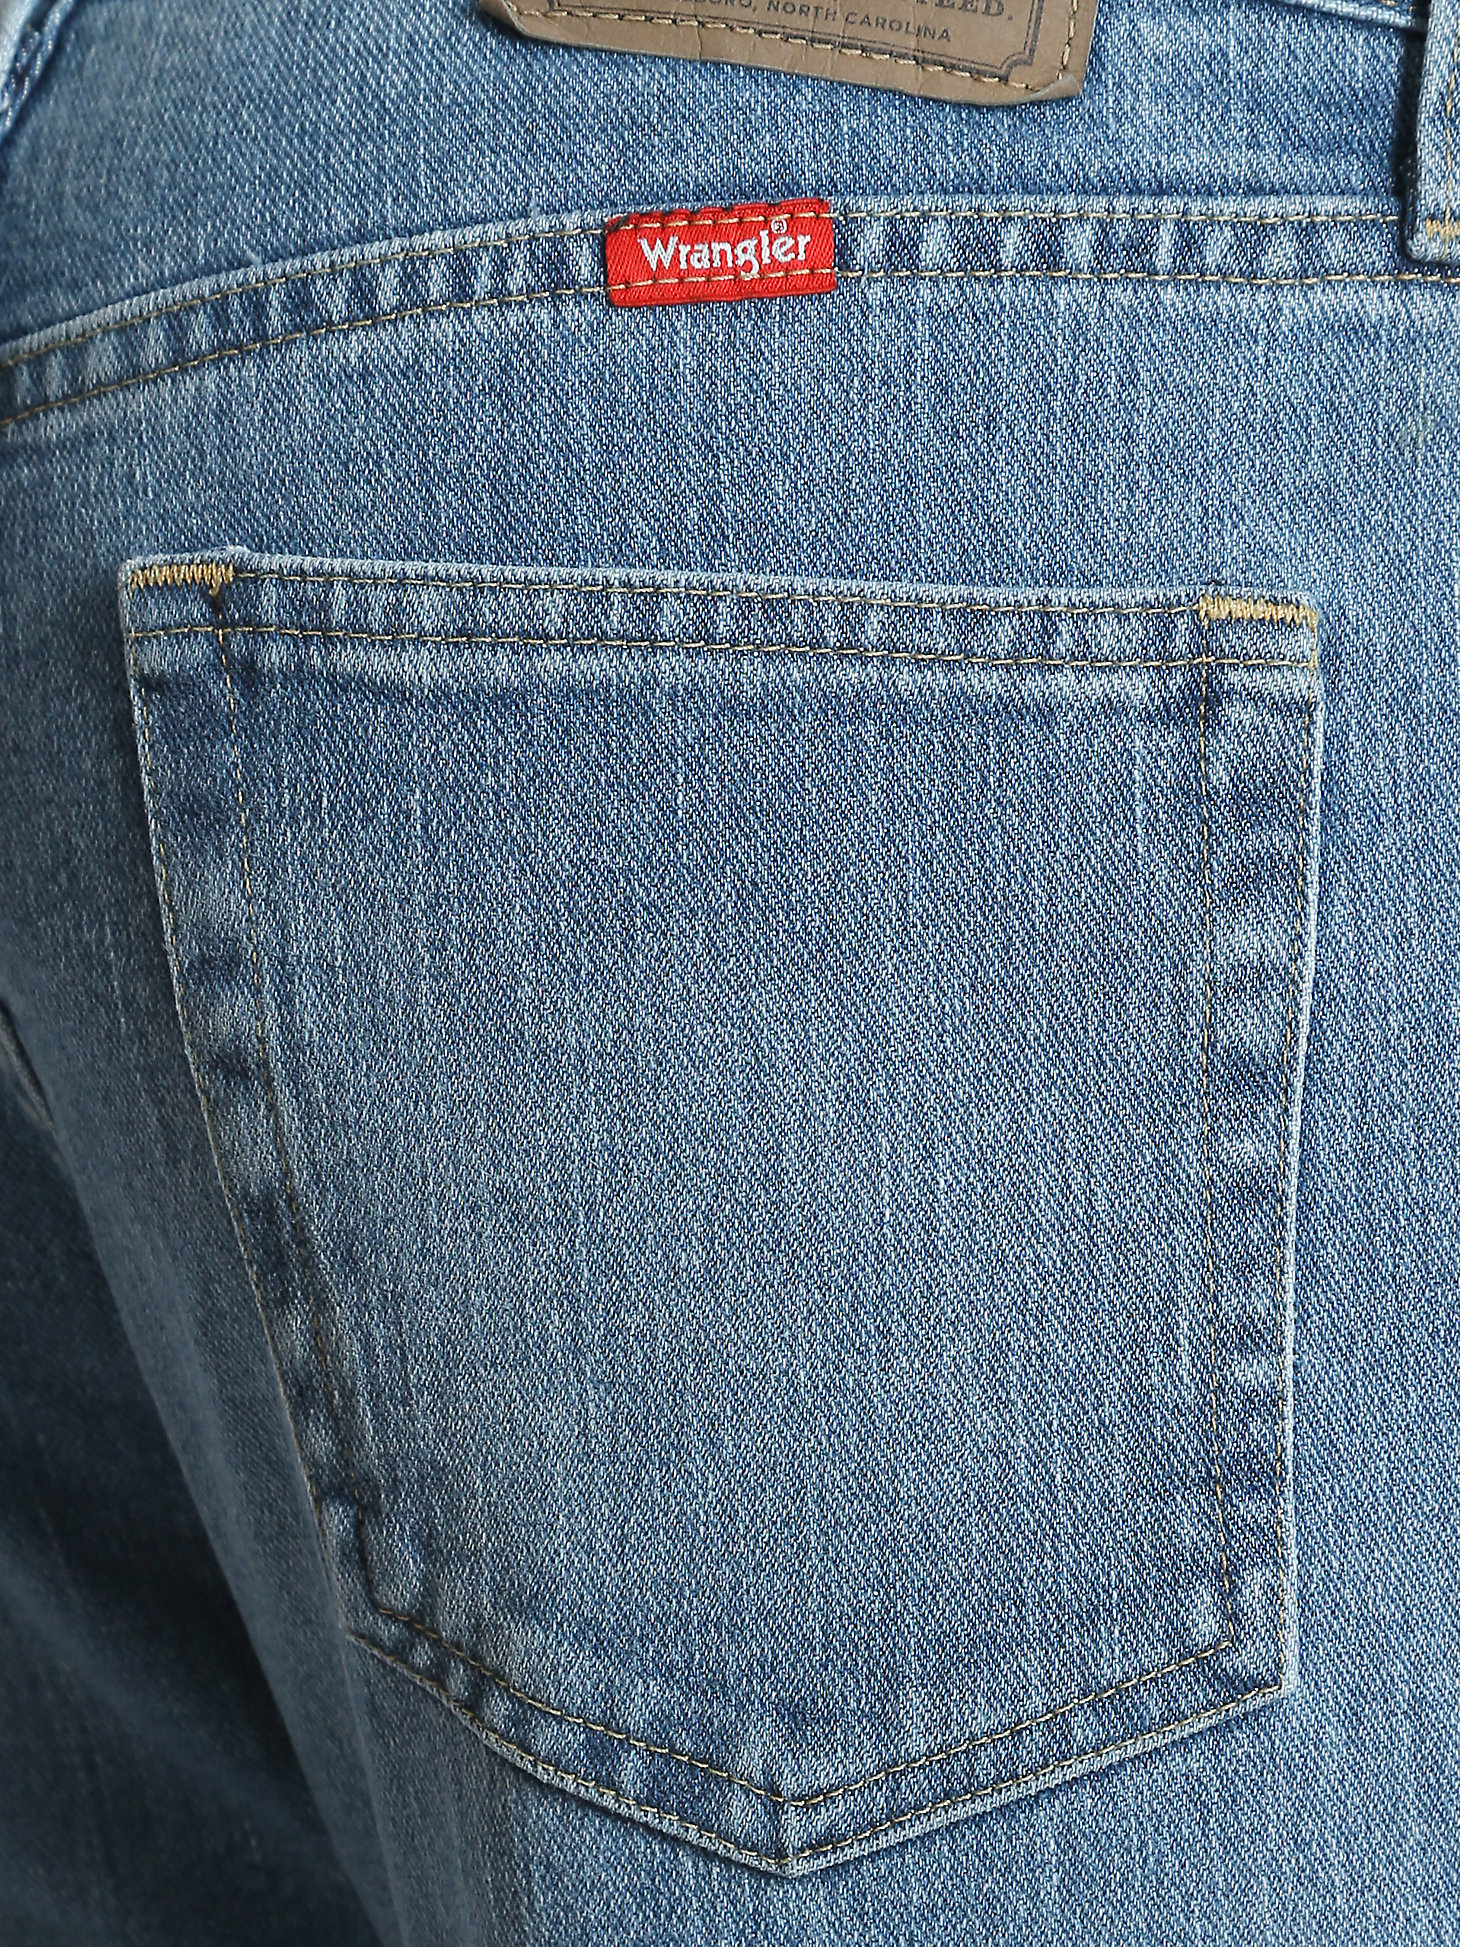 Wrangler® Five Star Premium Denim Flex For Comfort Regular Fit Jean in Stonewash Light alternative view 4